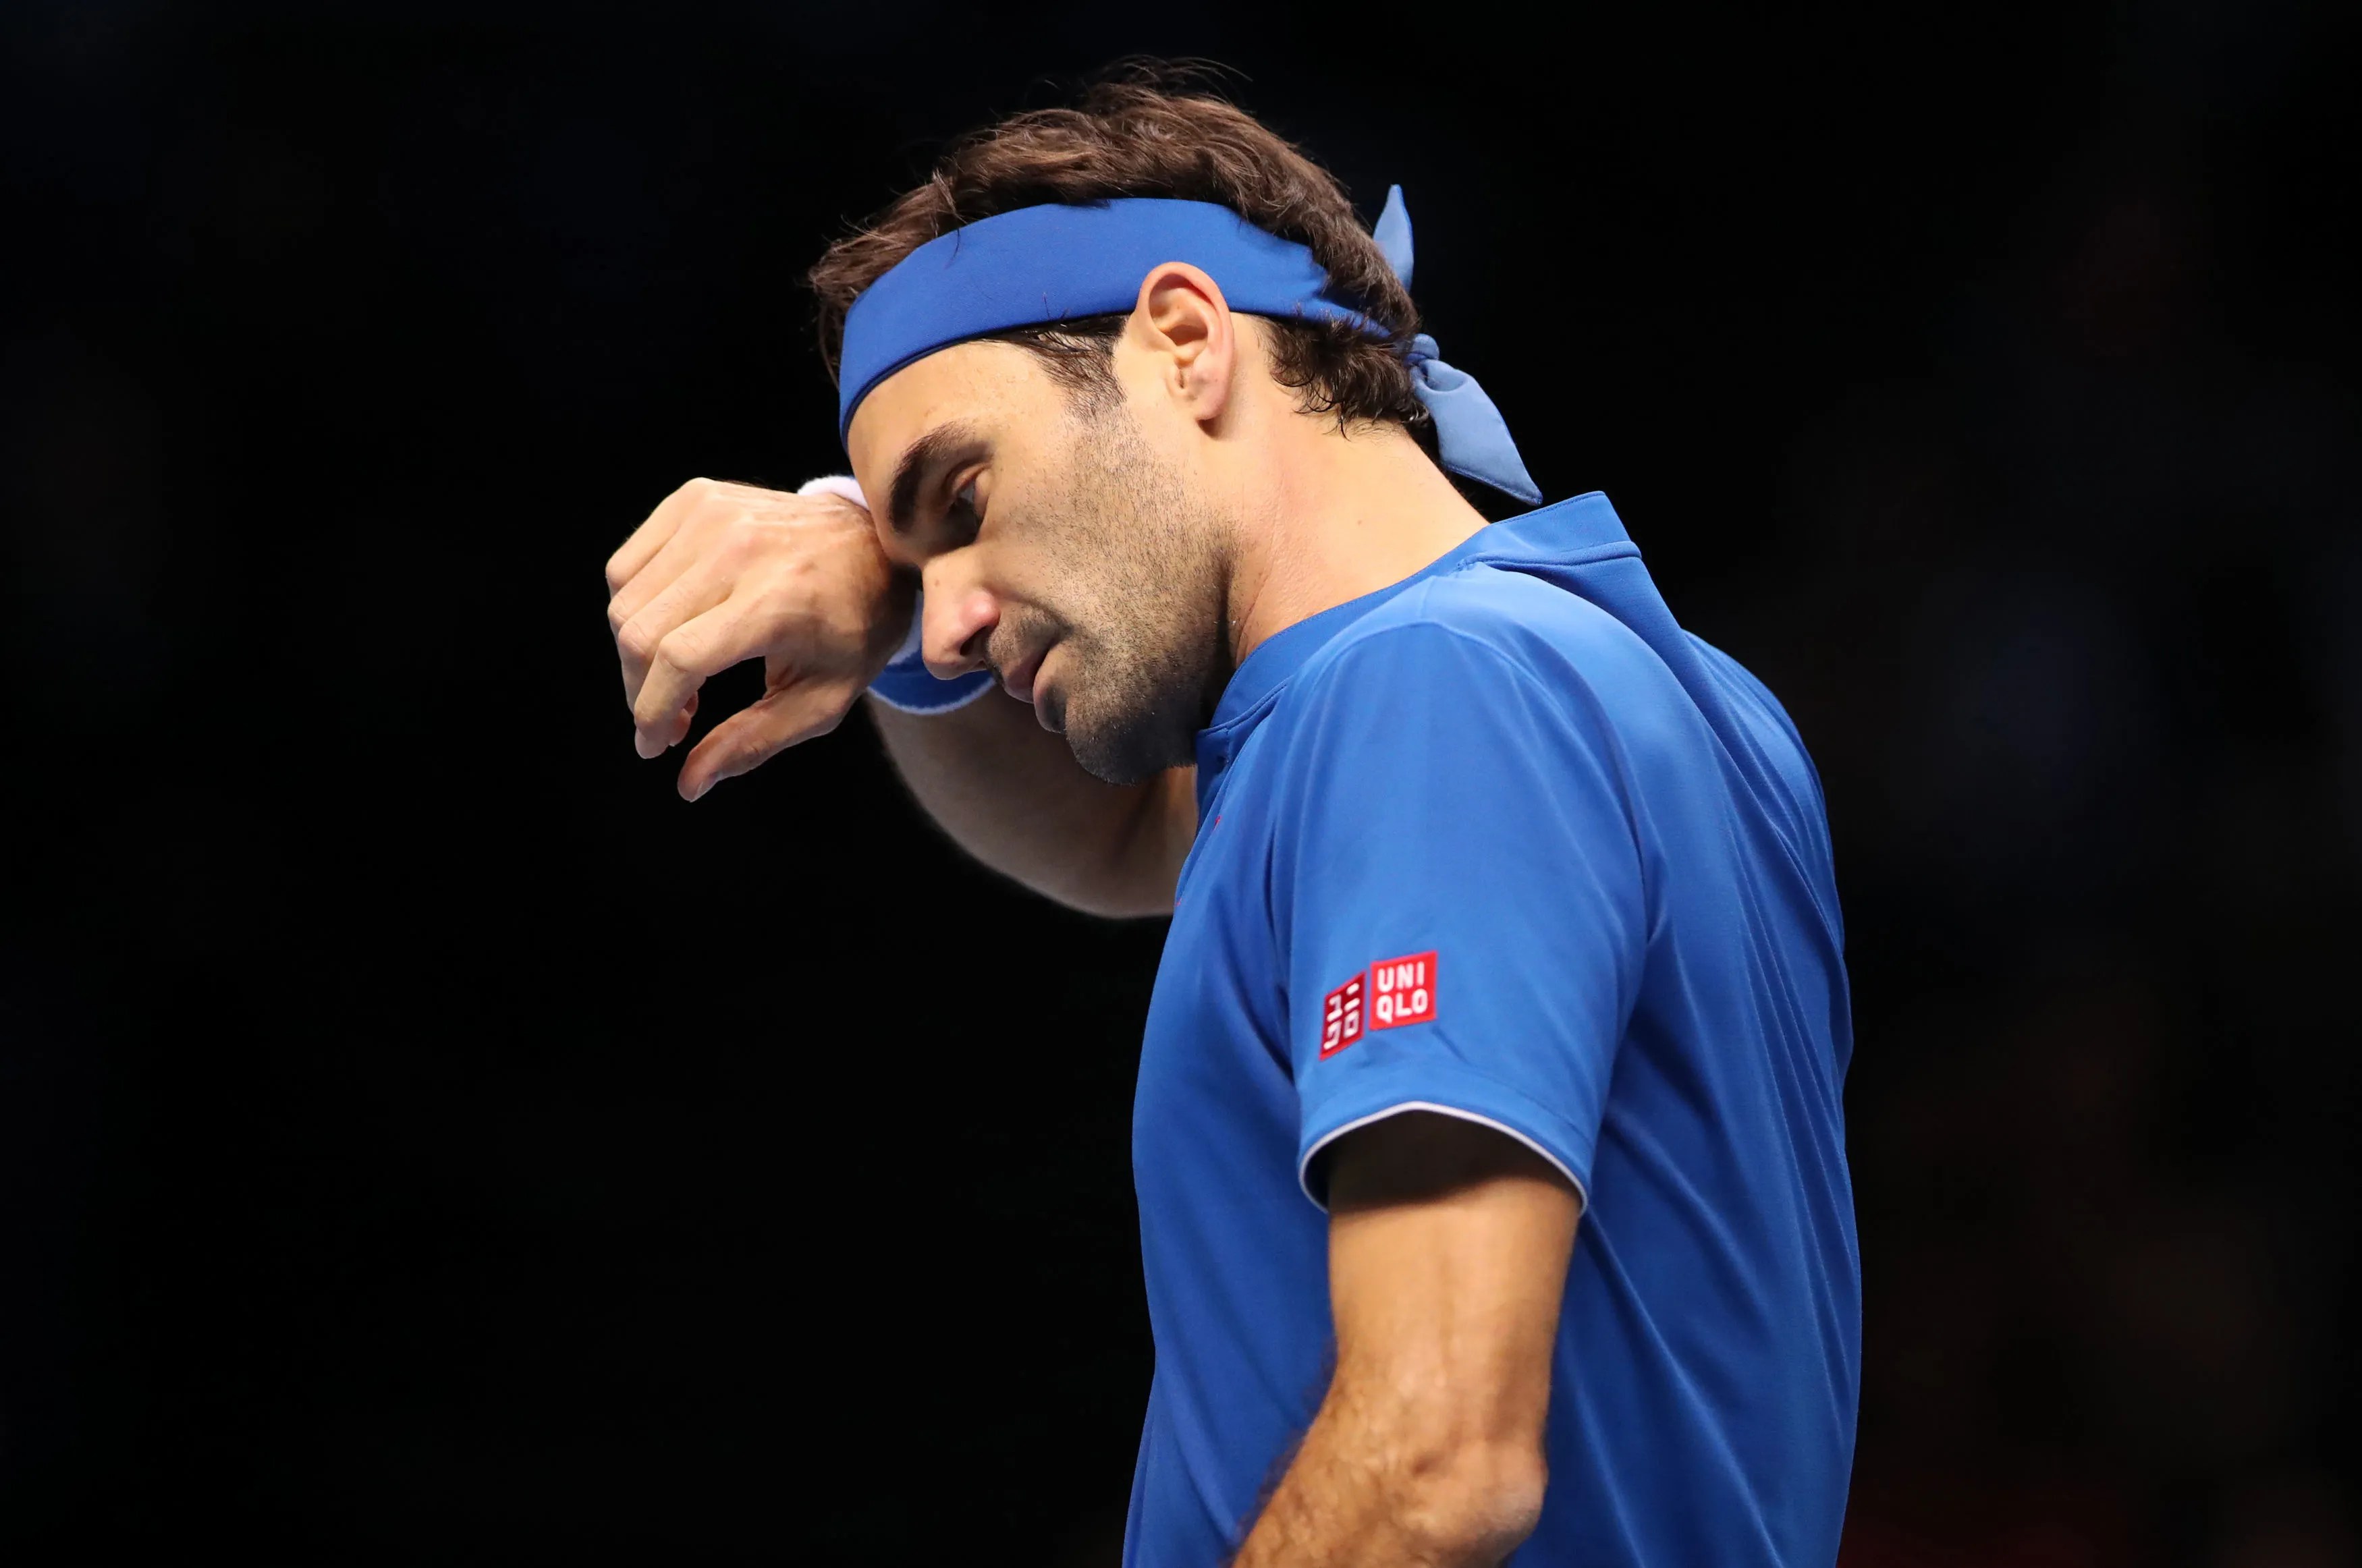 Roger Federer: Tennis legend Roger Federer lifts lid post-retirement about tough ATP, WTA Tour demands, says 'Mental health not helped by tough tour demands' - CHECK out